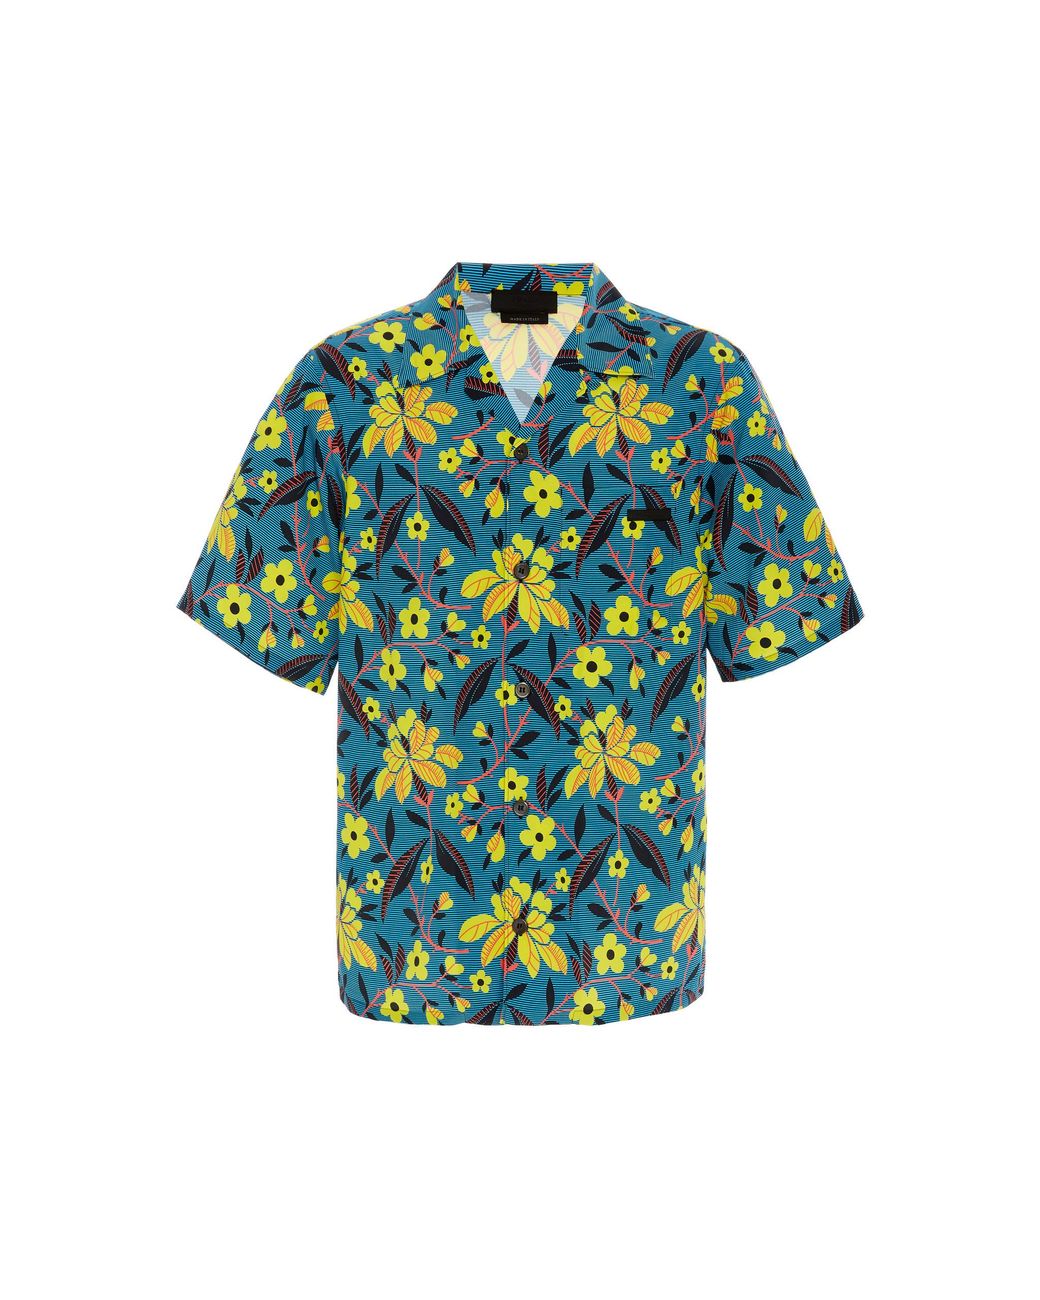 Prada Leather Floral-print Hawaiian Shirt in Blue for Men - Lyst